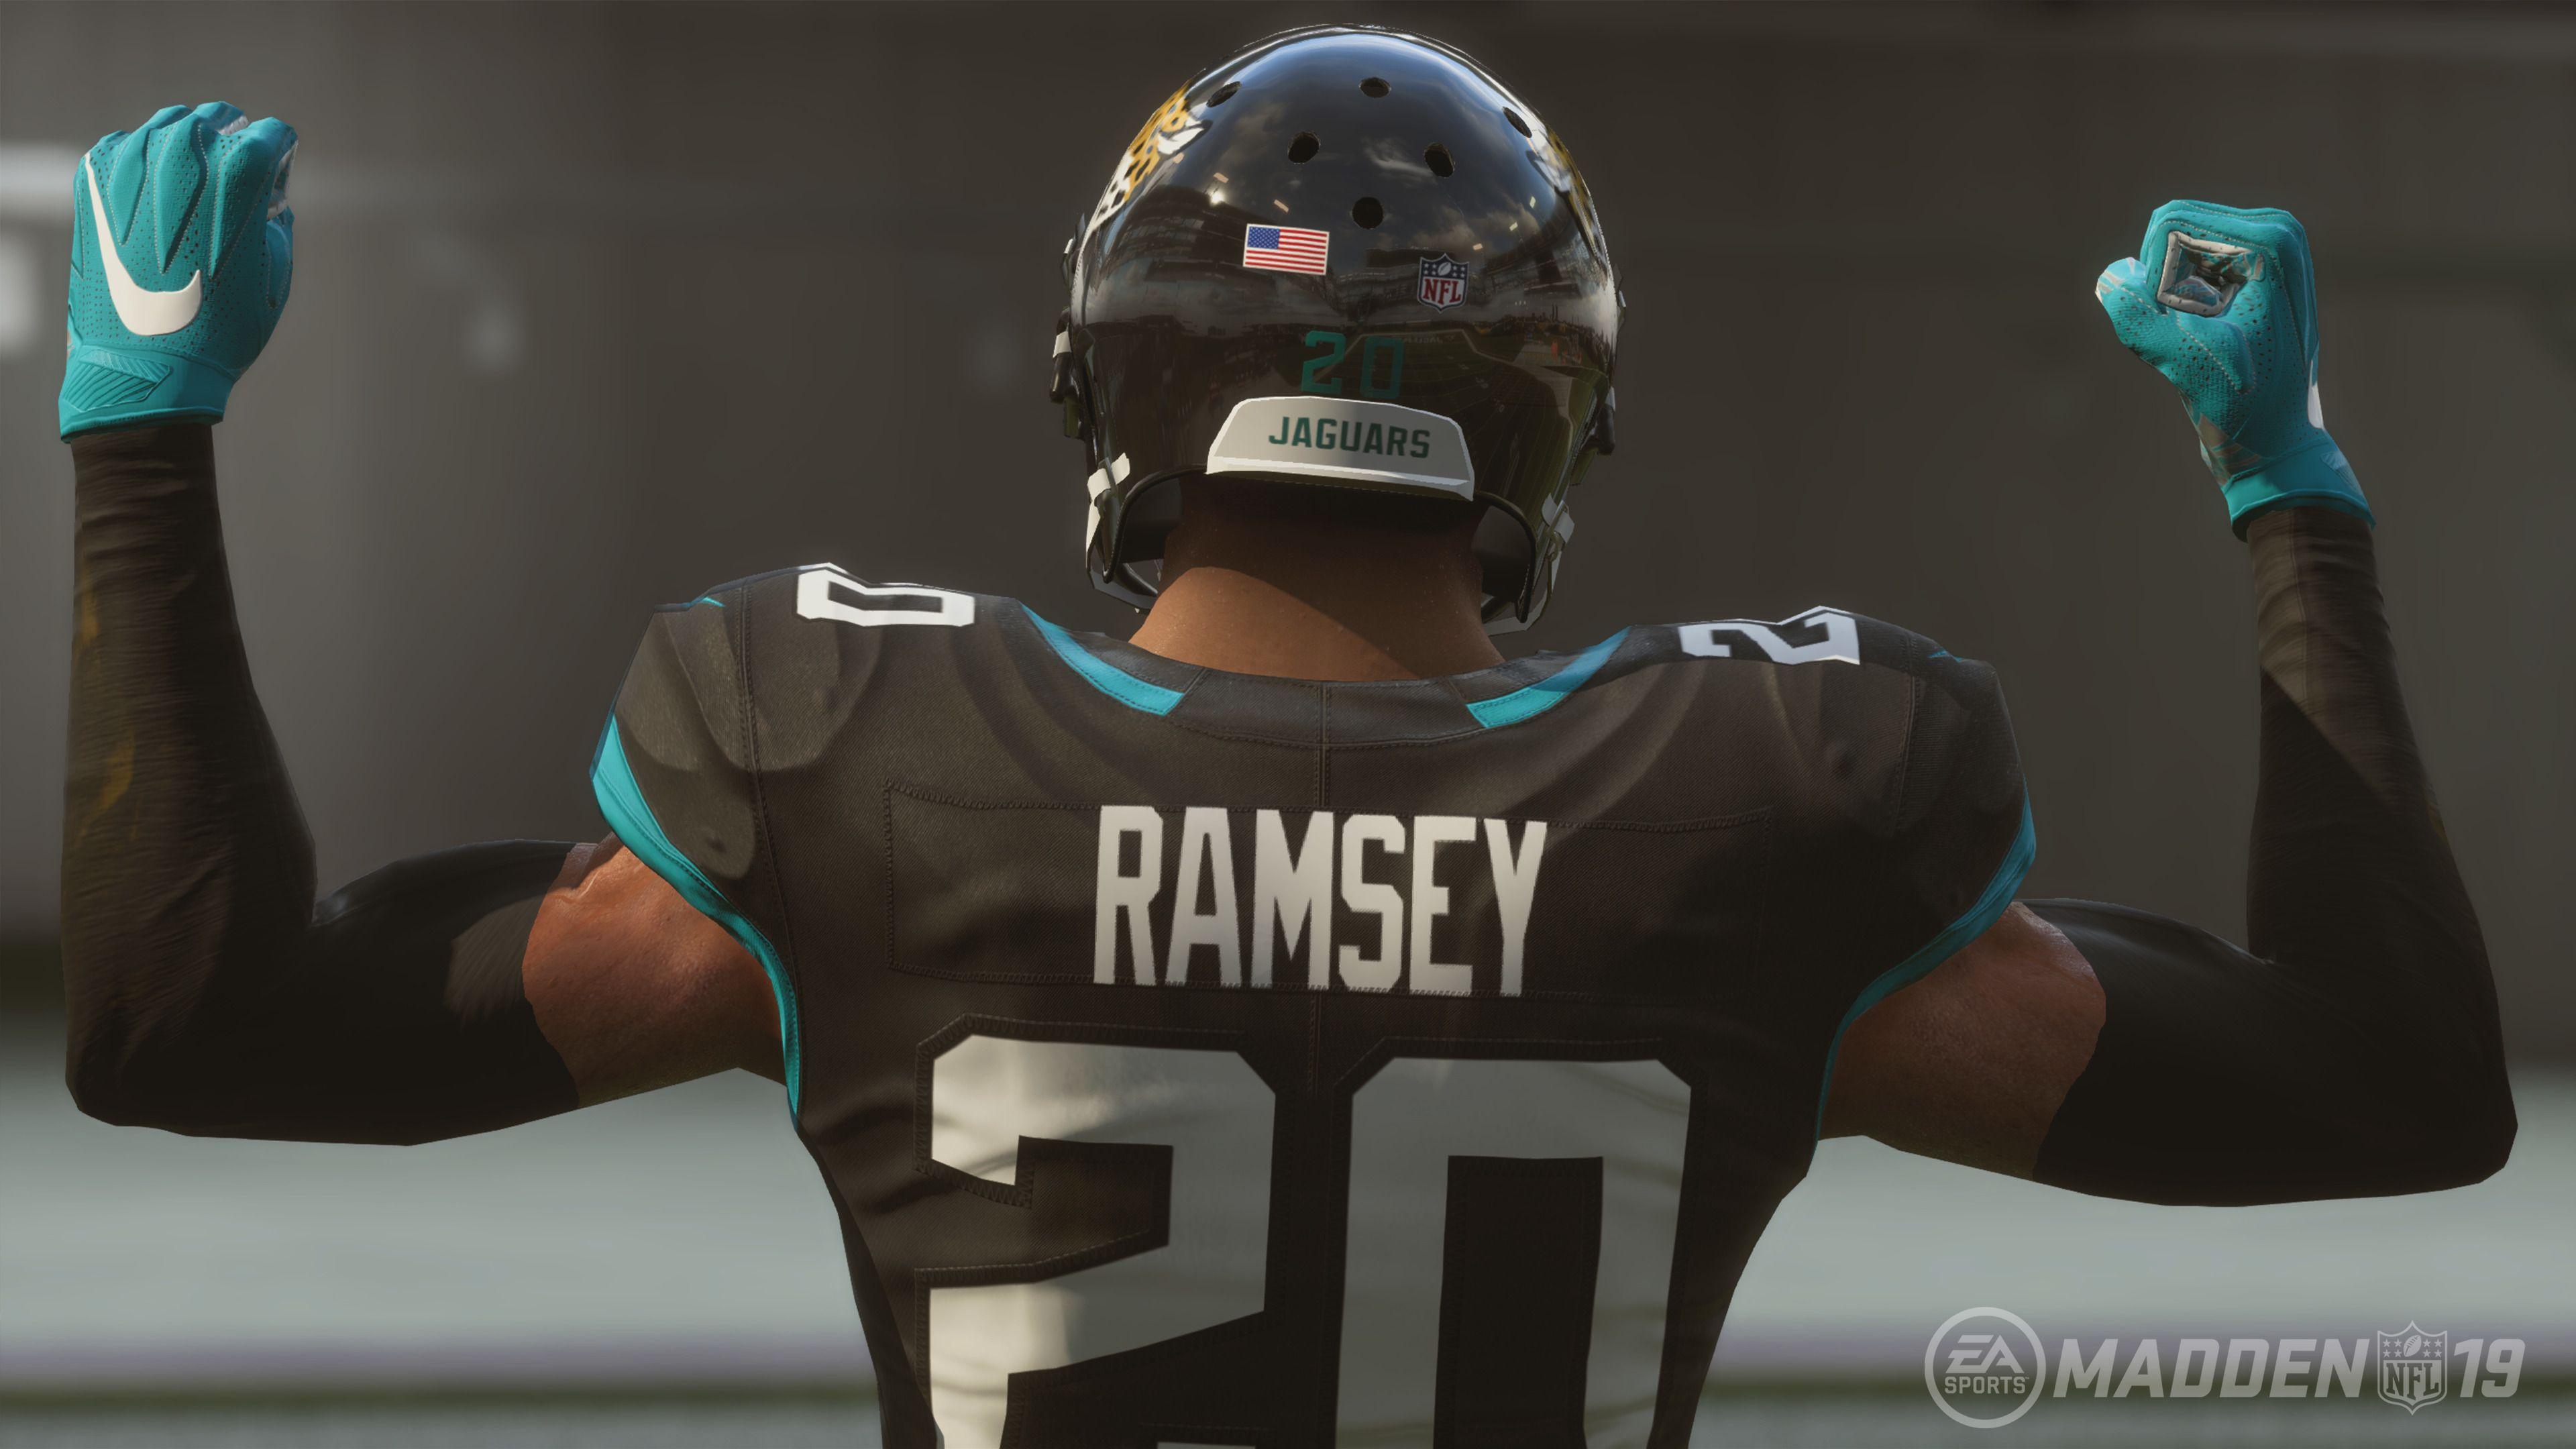 Ramsey Madden NFL HD Games, 4k Wallpaper, Image, Background